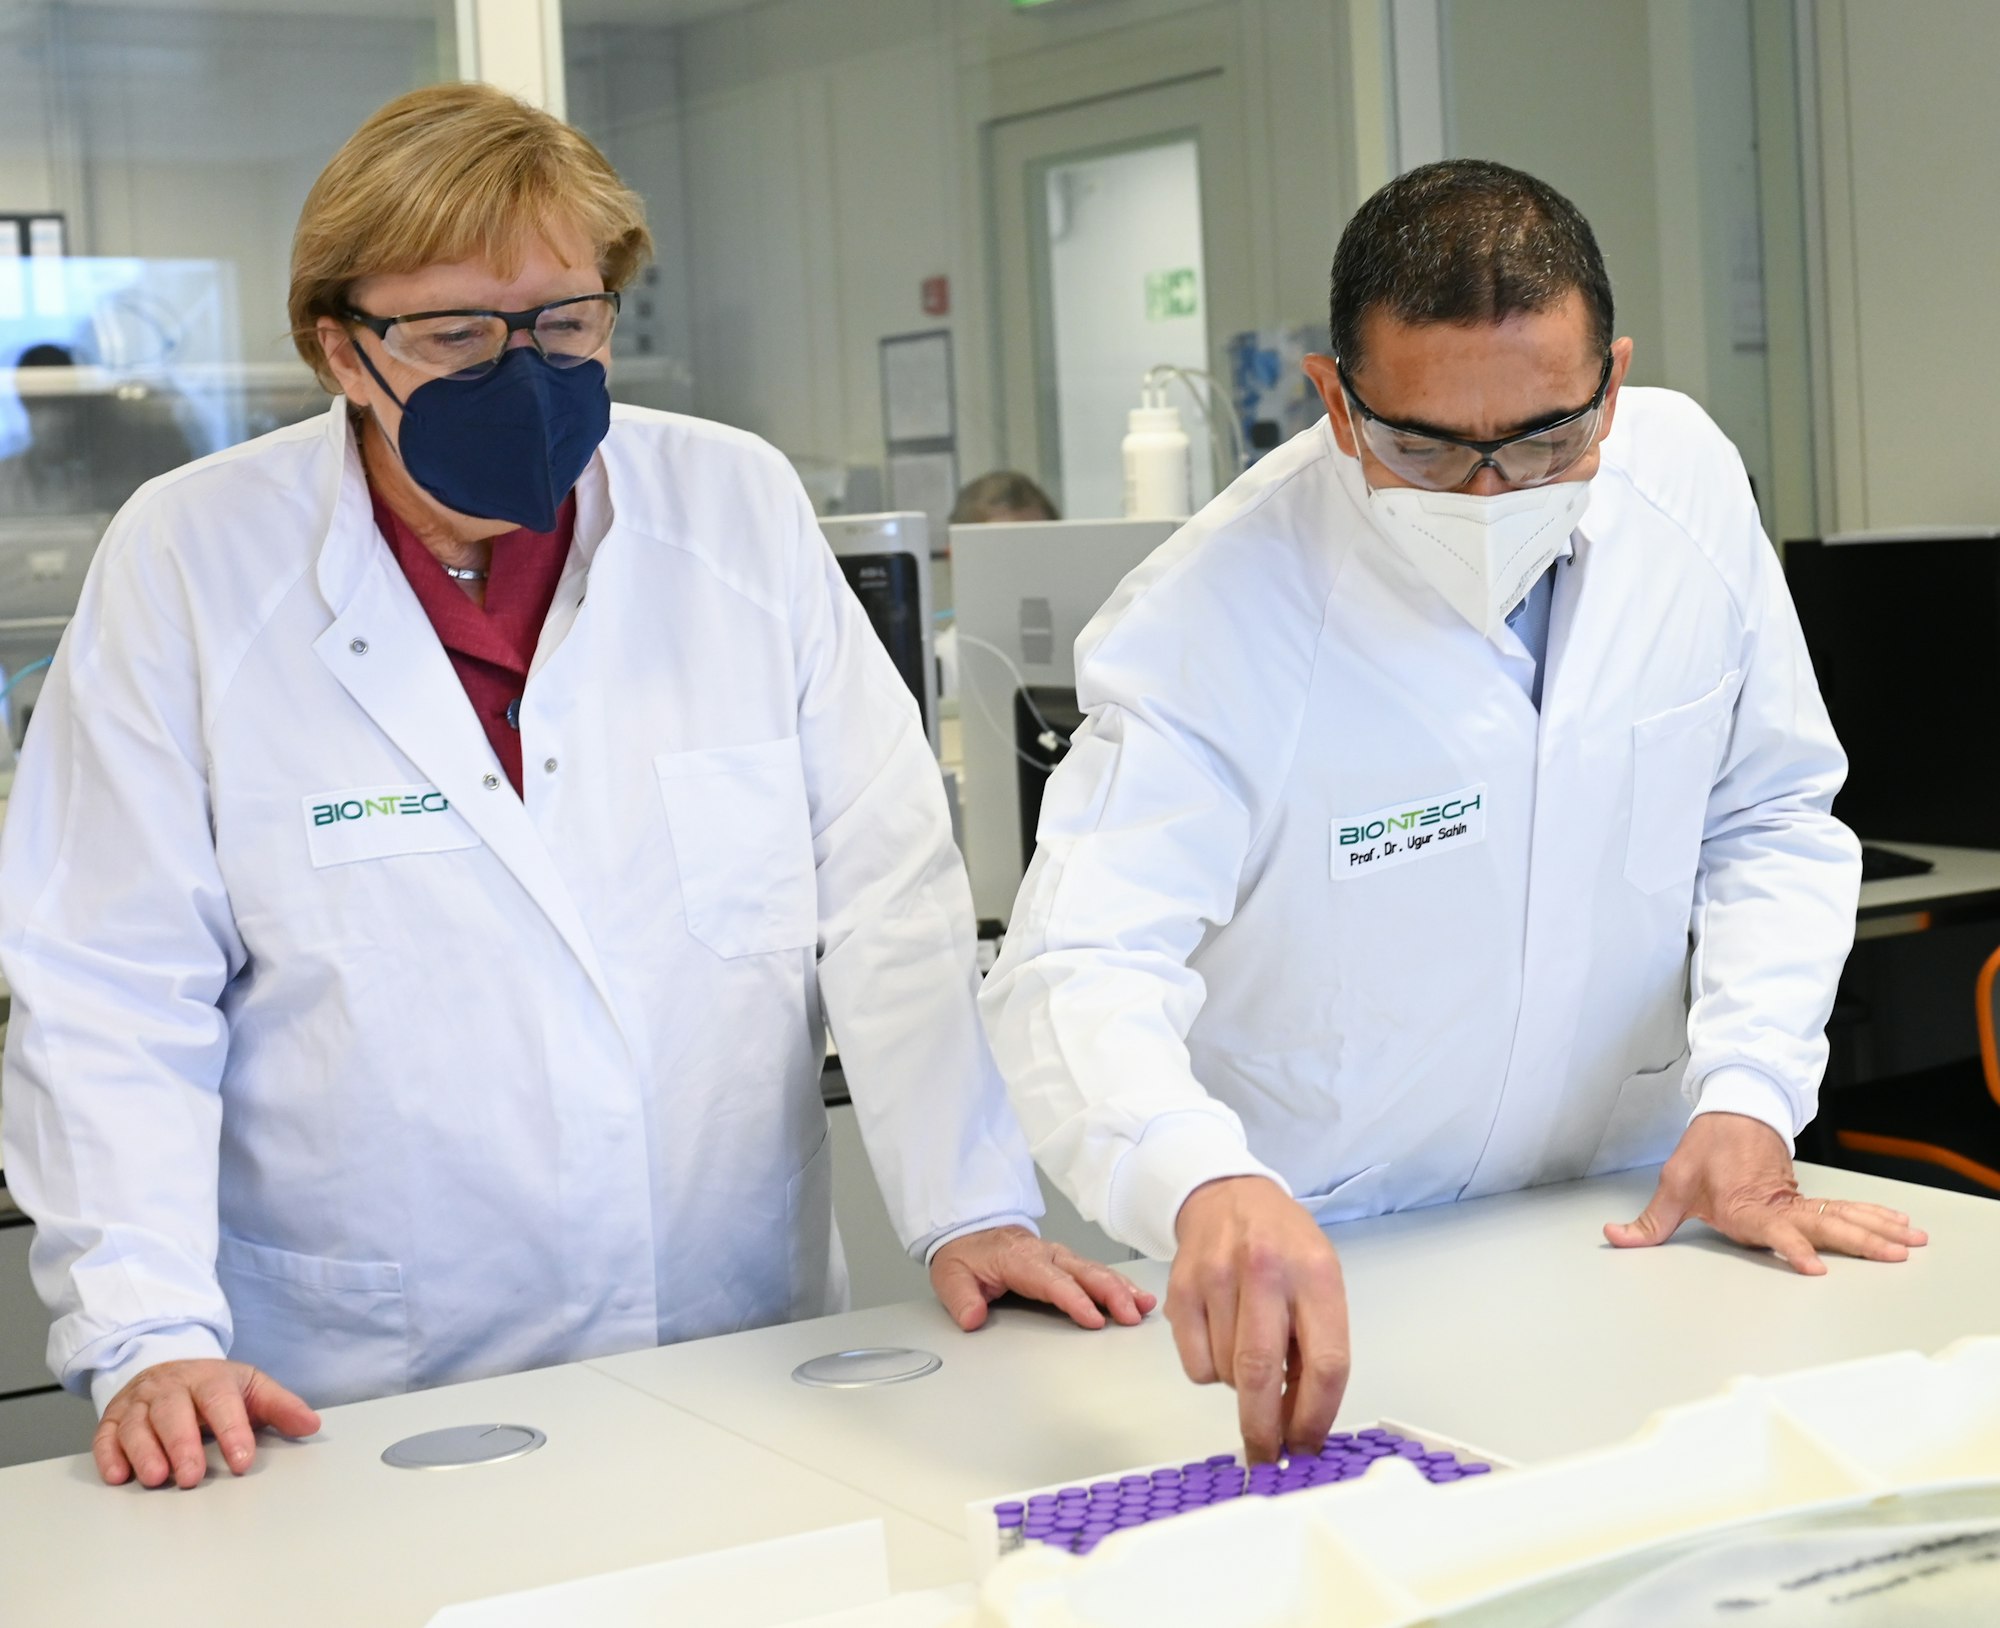 Ugur Sahin und Angela Merkel im Biontech-Labor.